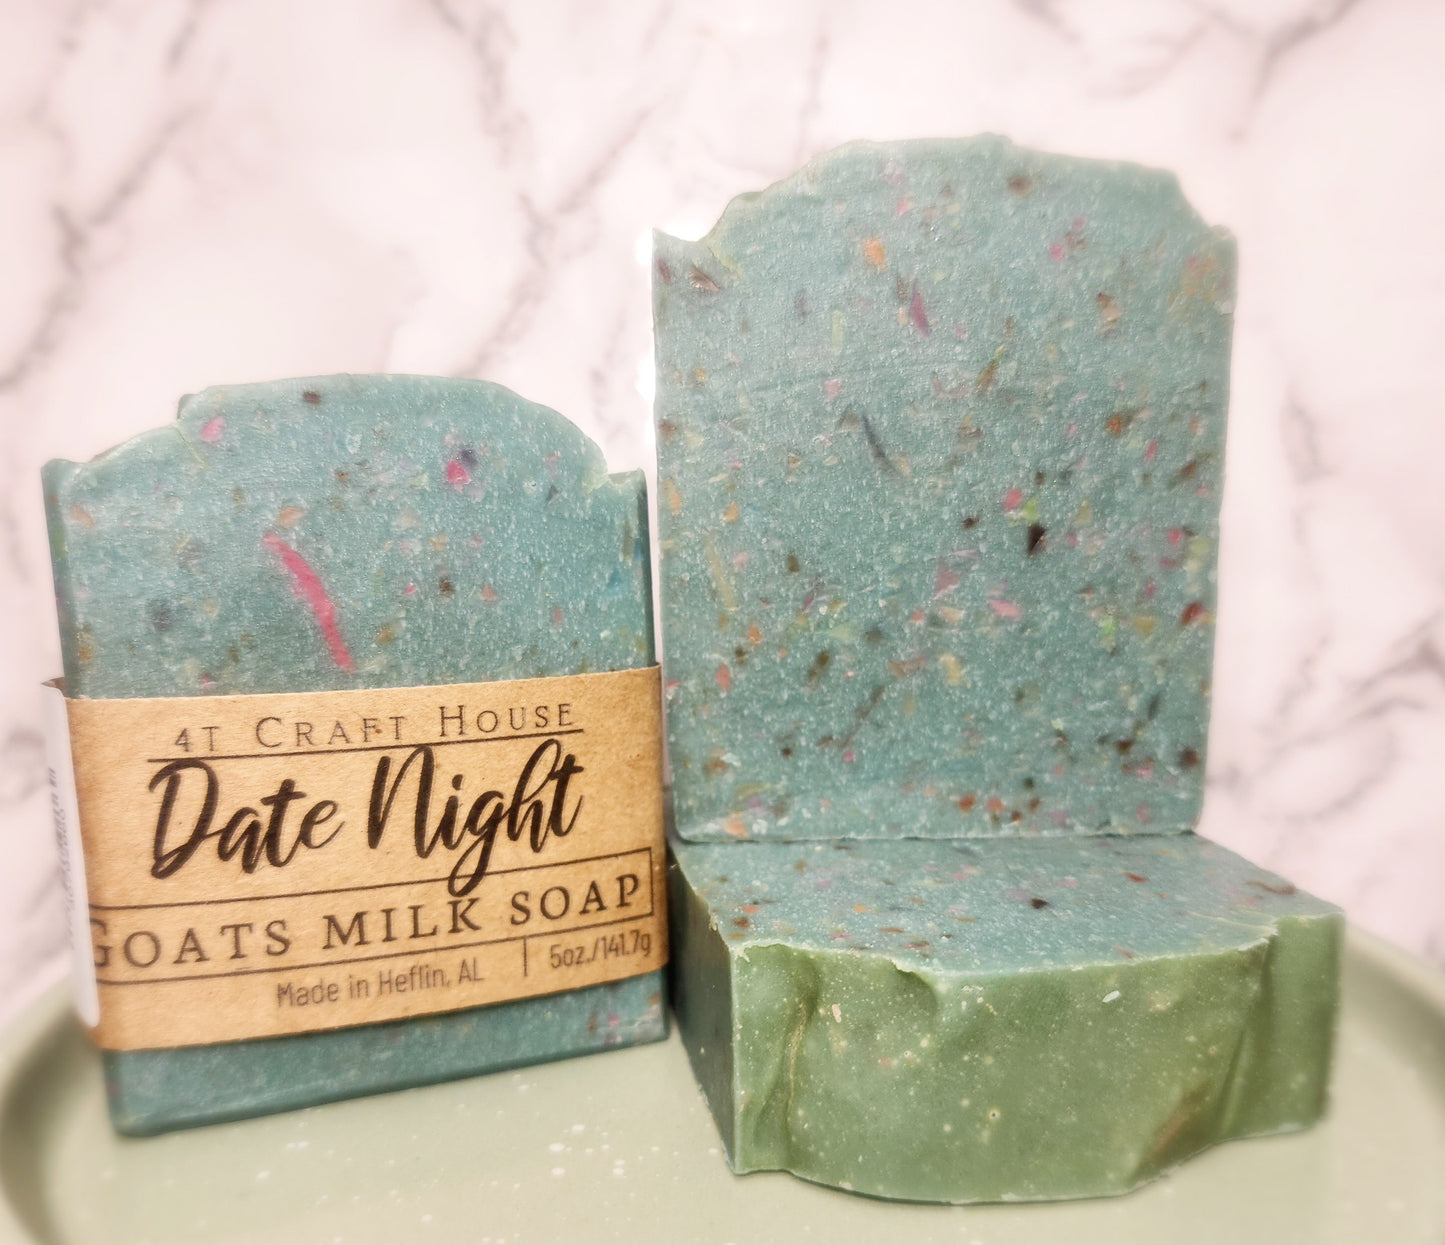 Date Night Goats Milk Soap